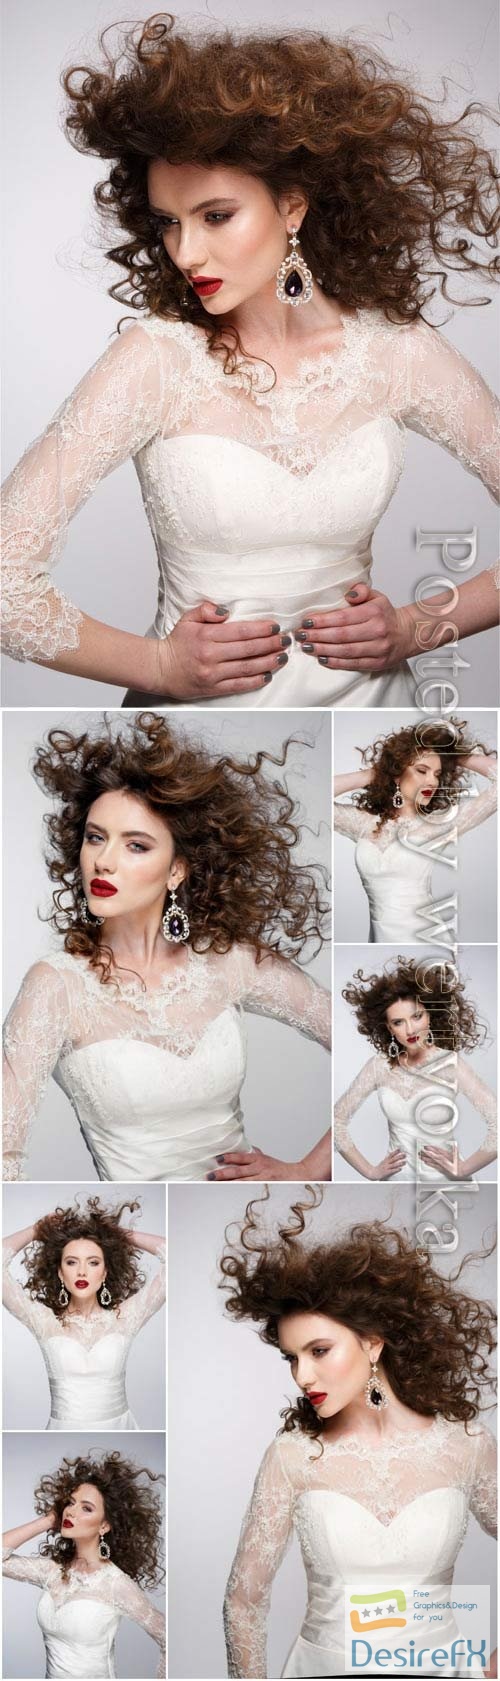 Luxurious girl in white wedding dress stock photo